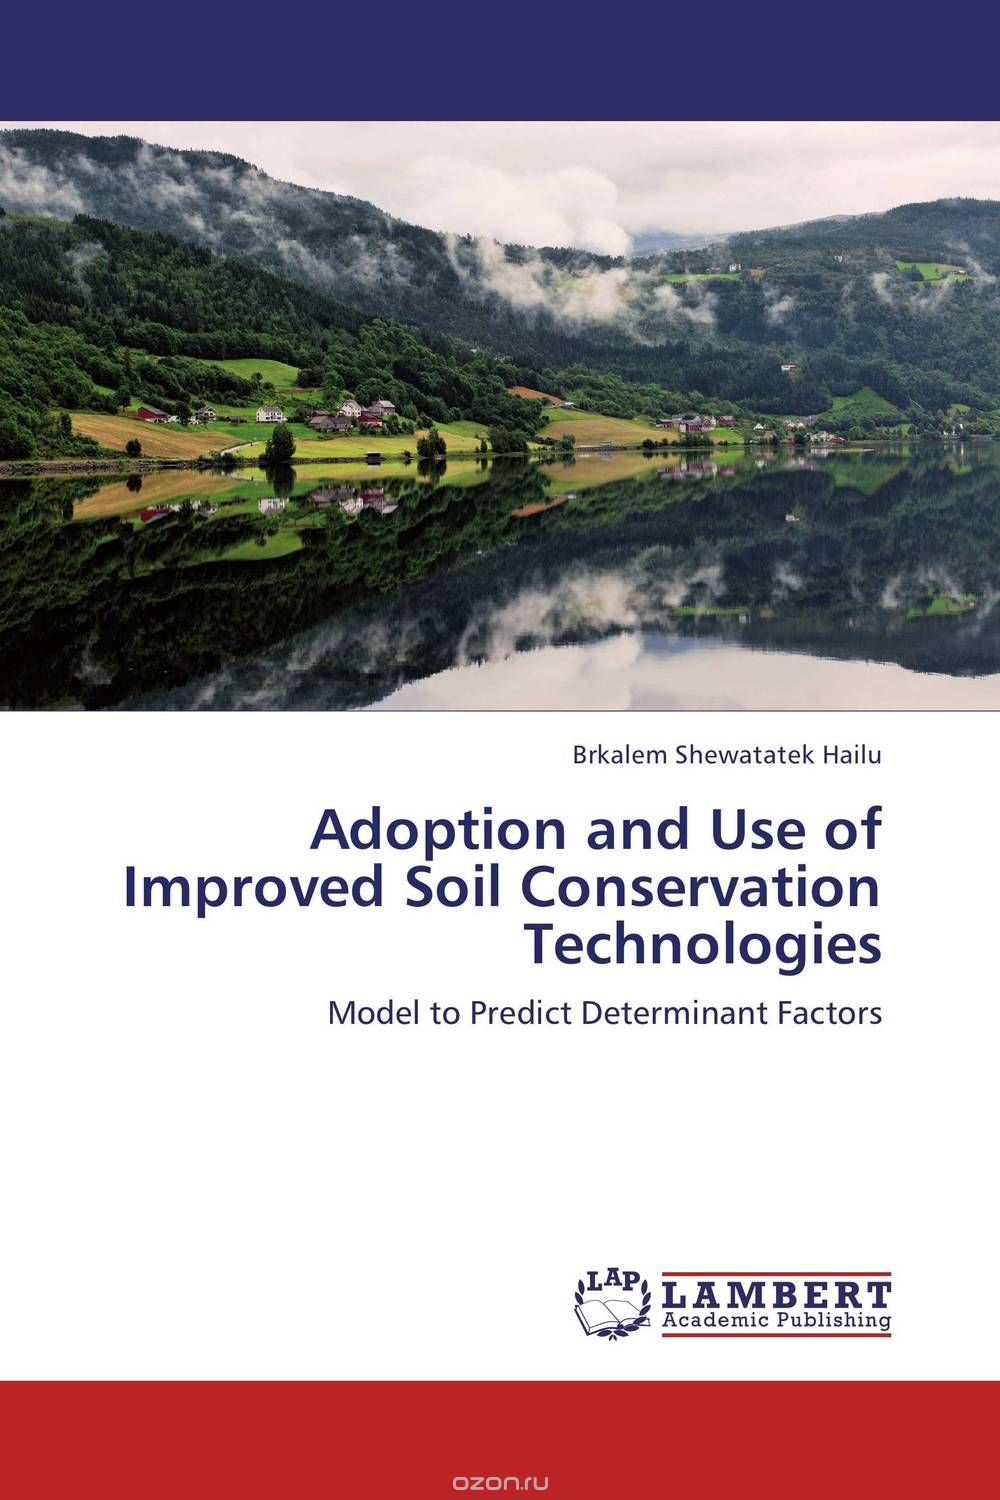 Скачать книгу "Adoption and Use of Improved Soil Conservation Technologies"